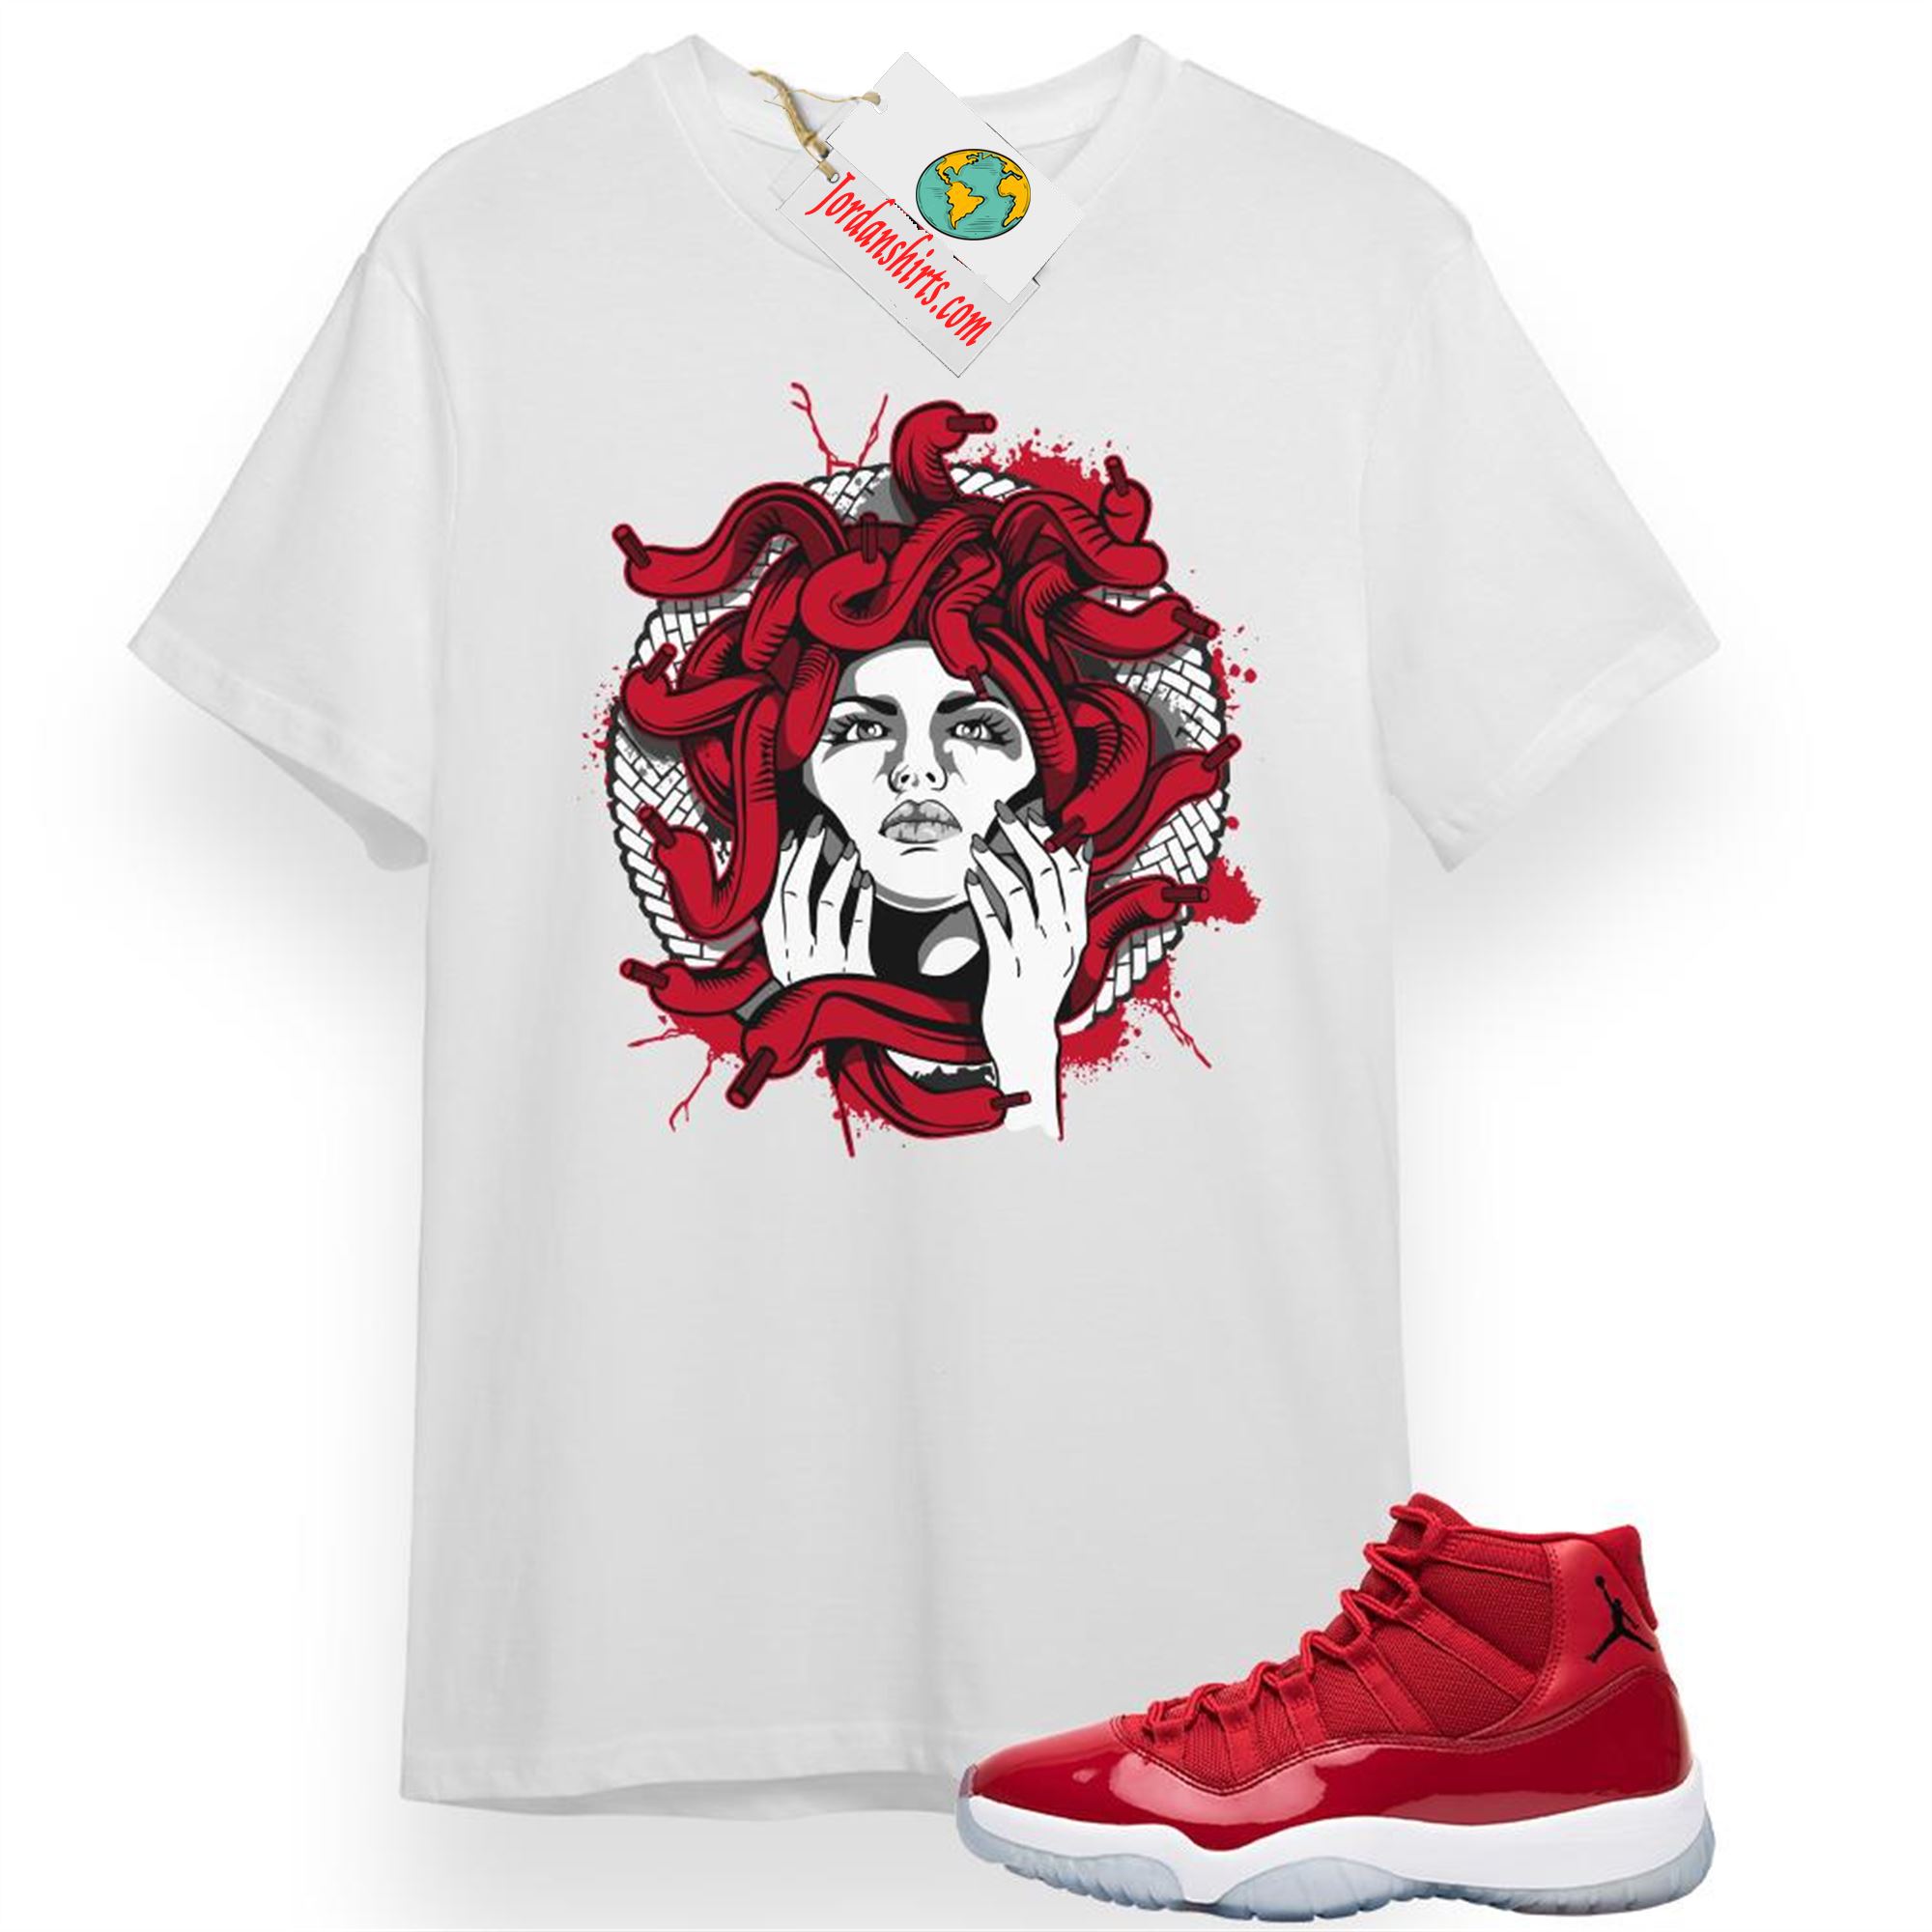 Jordan 11 Shirt, Medusa White T-shirt Air Jordan 11 Gym Red 11s Plus Size Up To 5xl